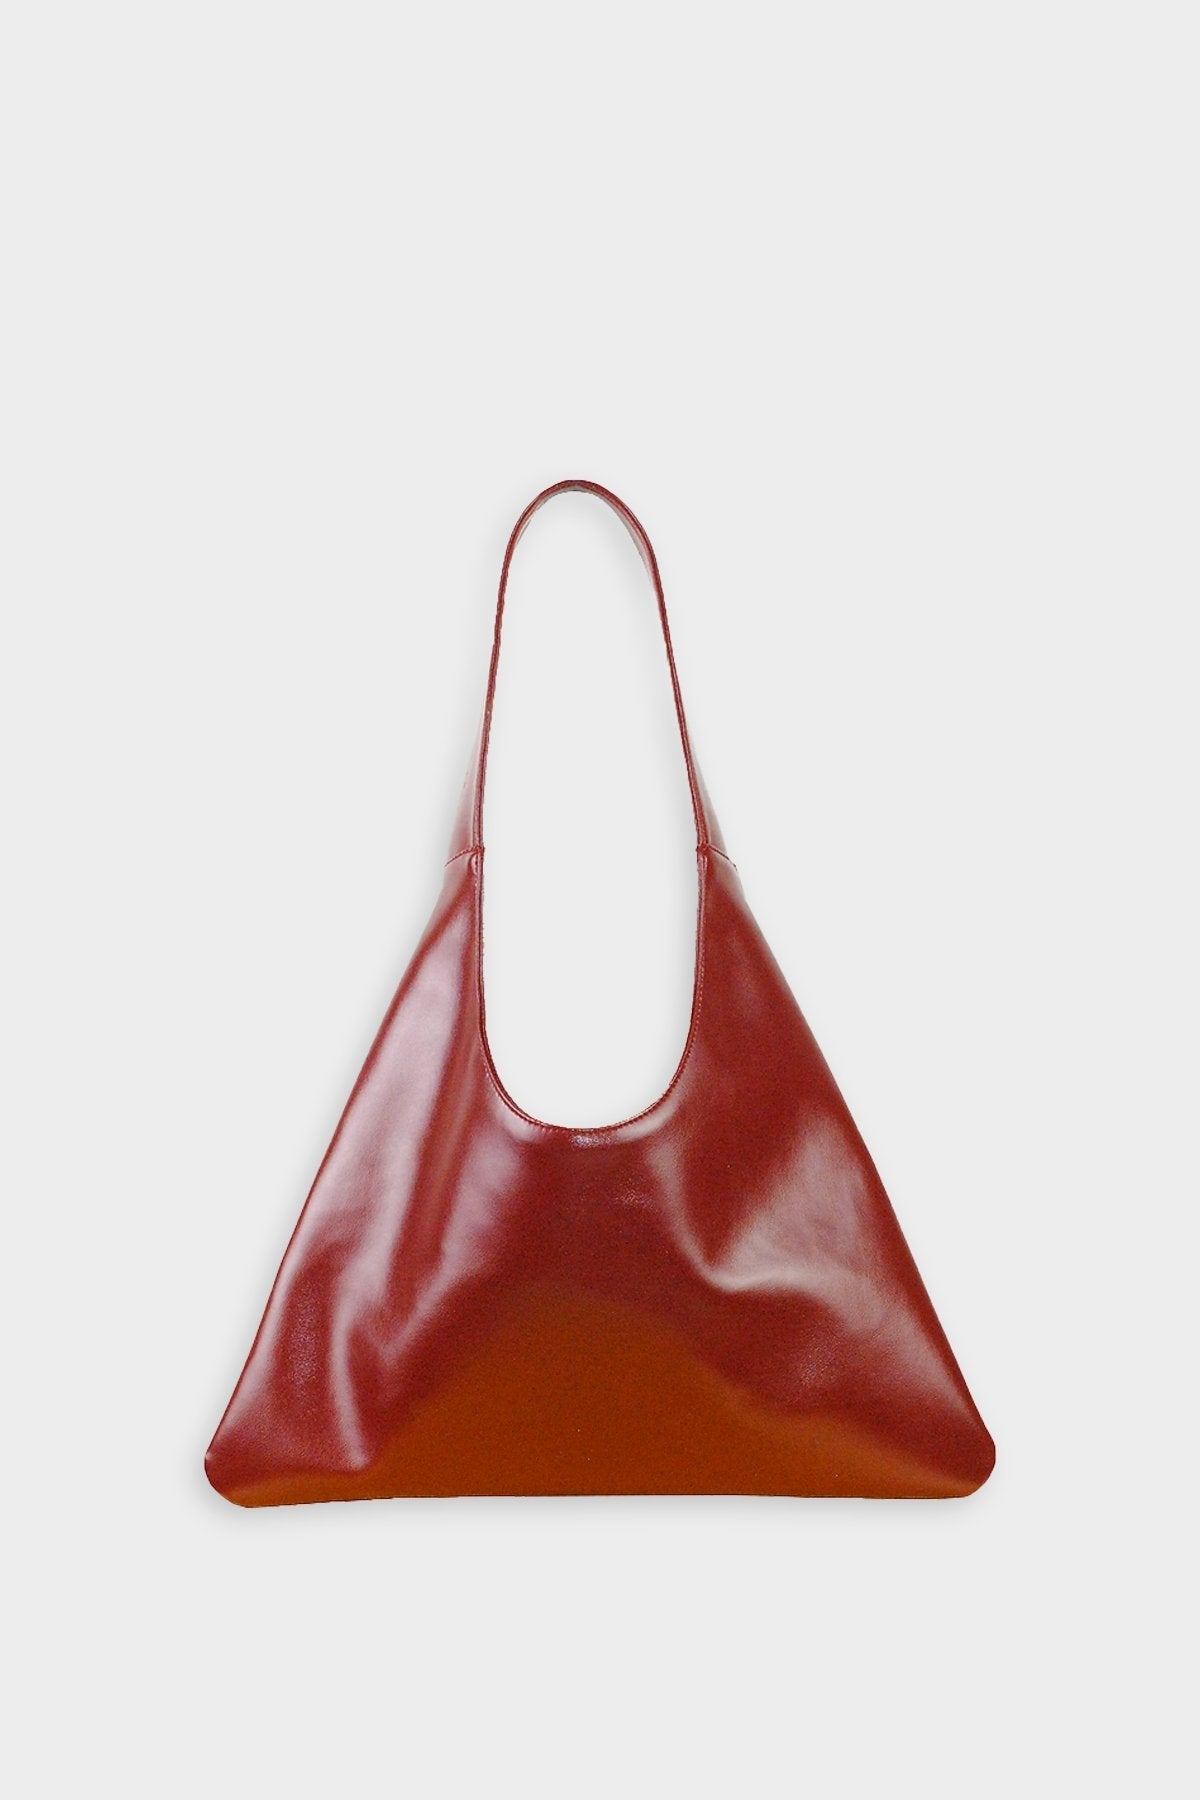 Agave Triangular Tote Bag in Burgundy - shop-olivia.com